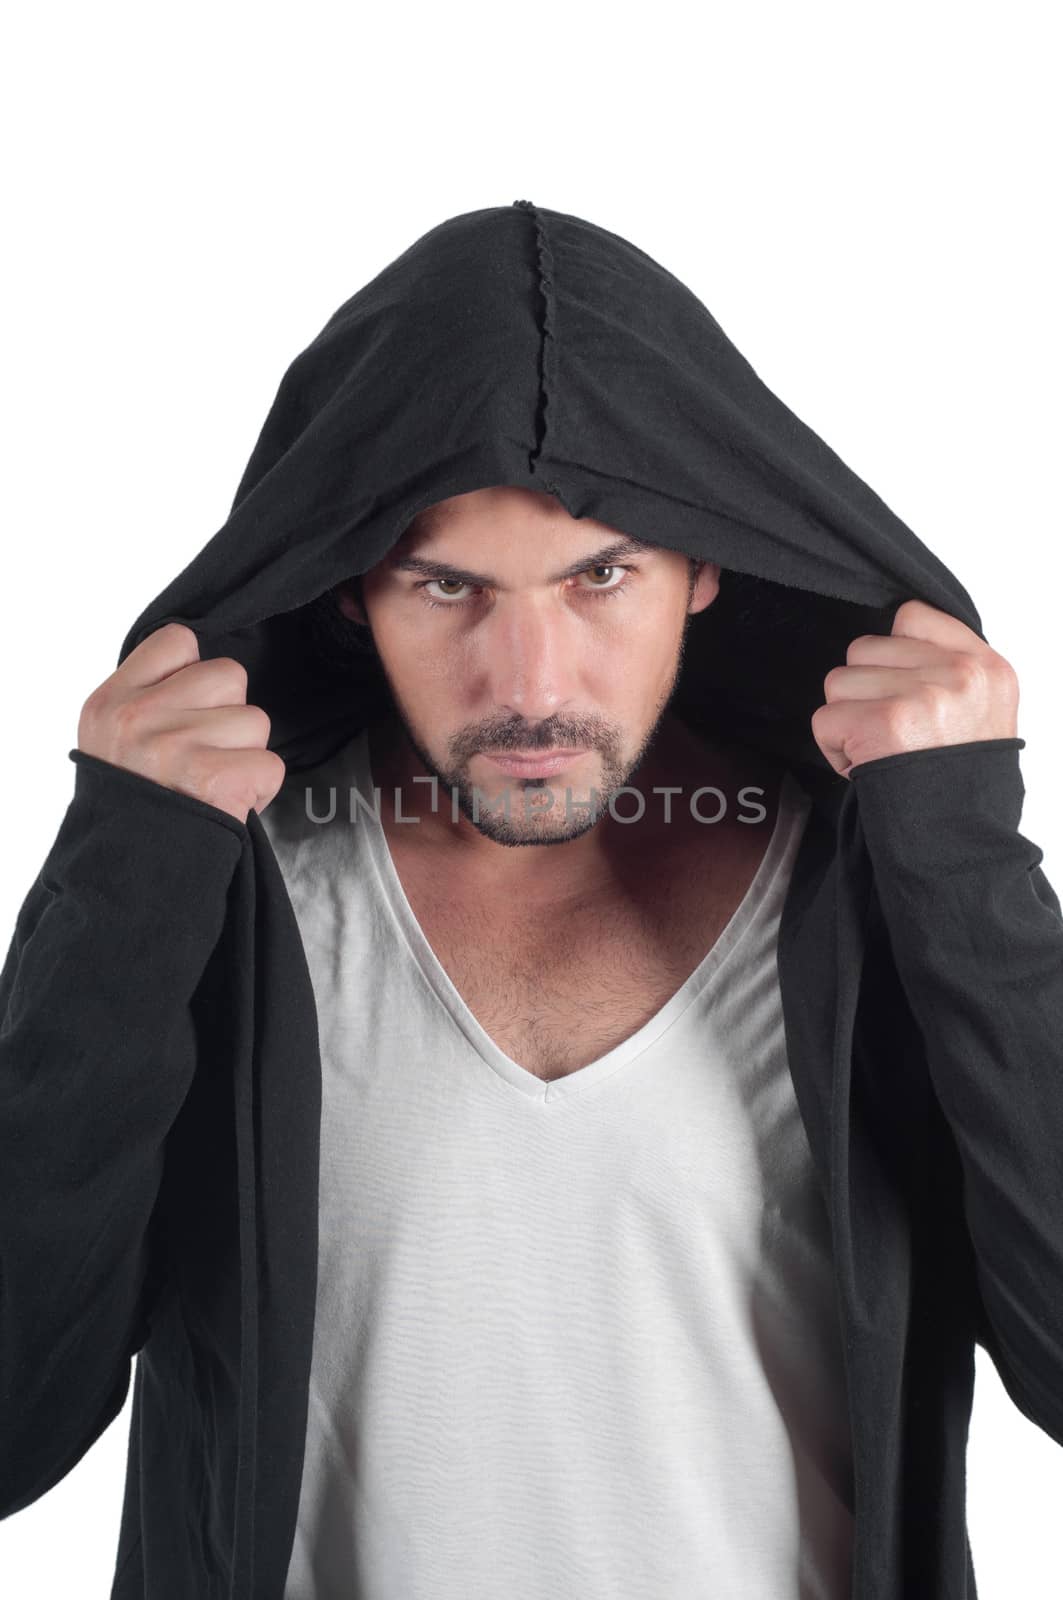 A man in a hood looks askance menacingly